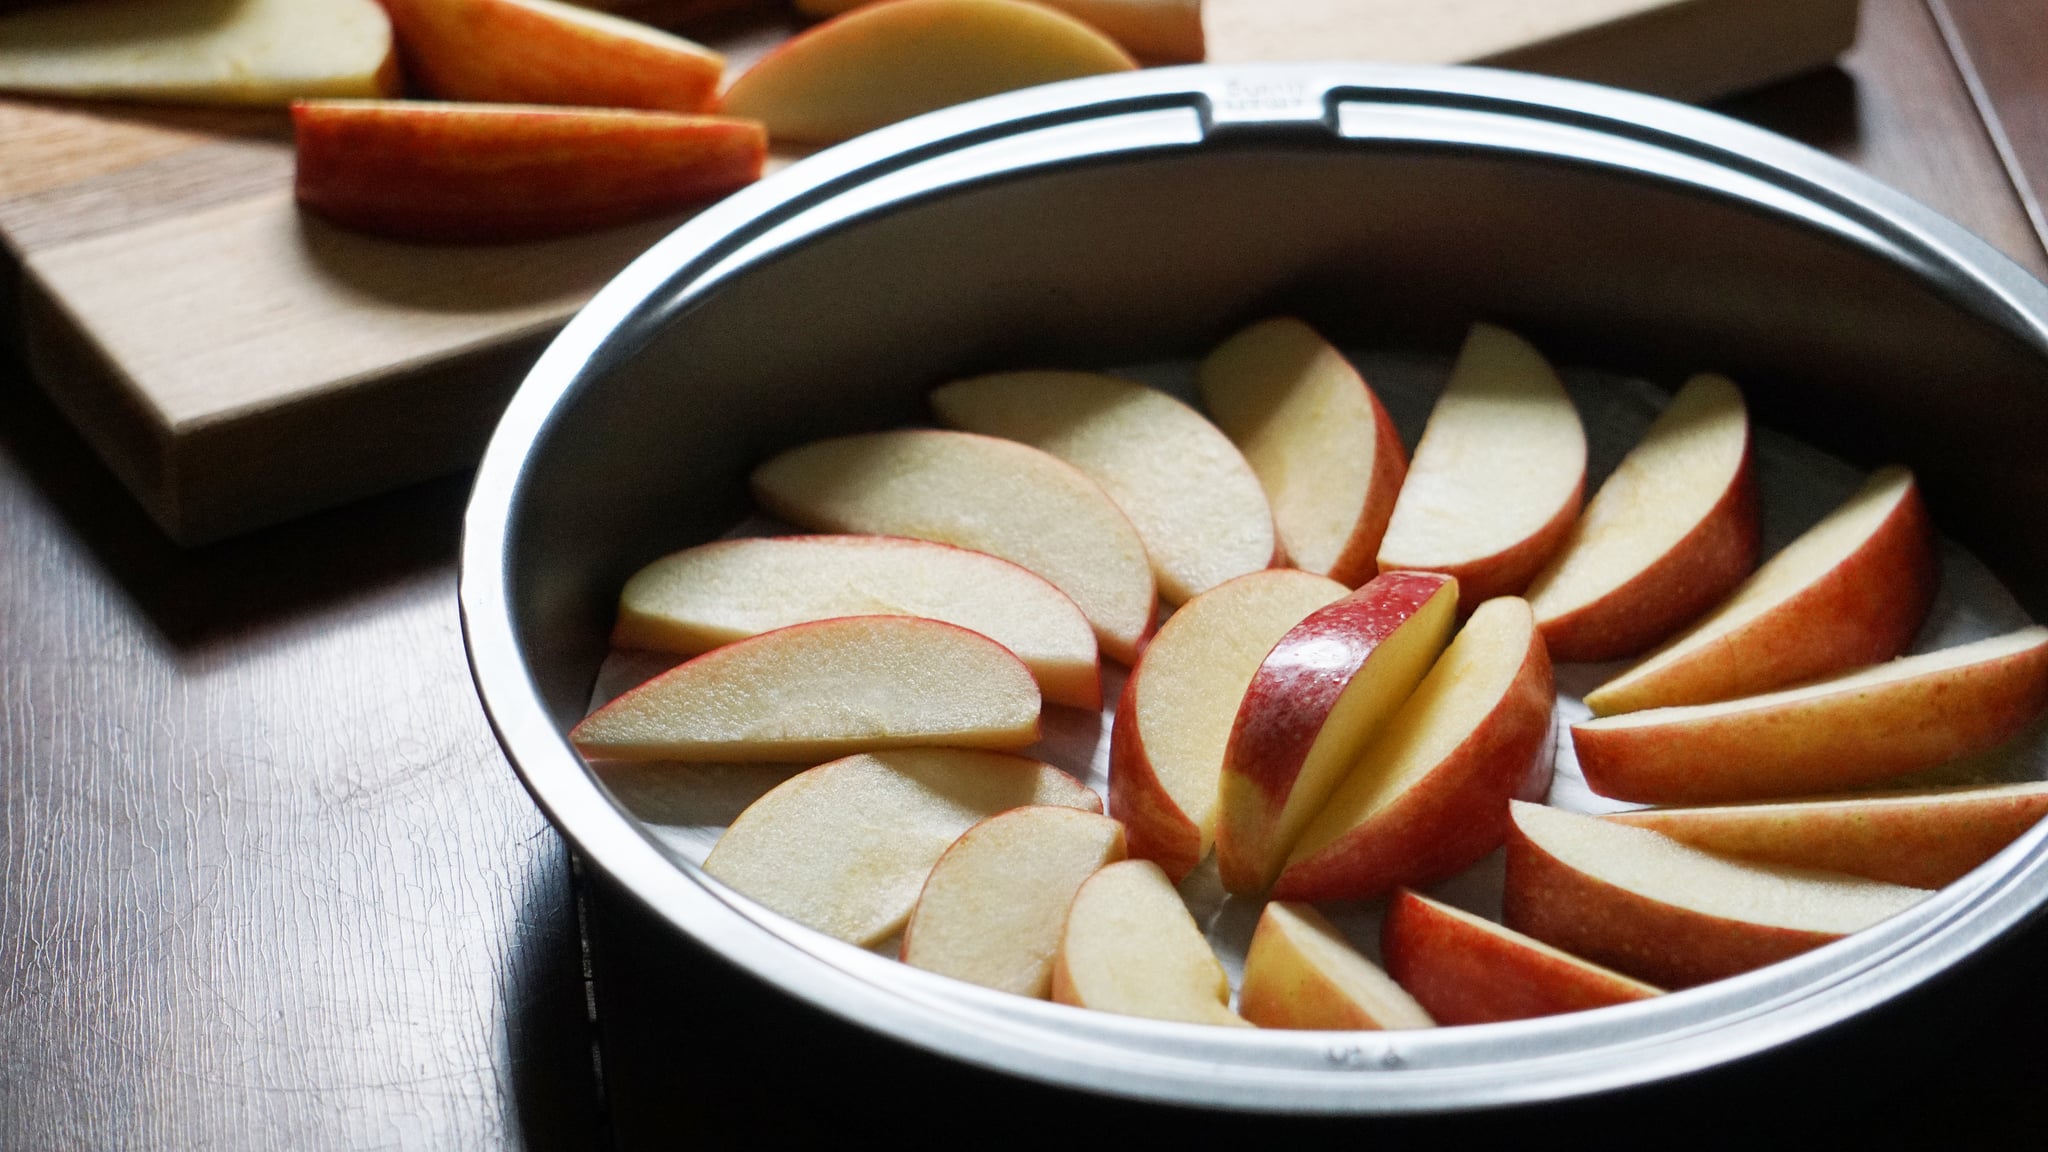 apple honey upside down cake for rosh hashanah dessert: placing apples in pan